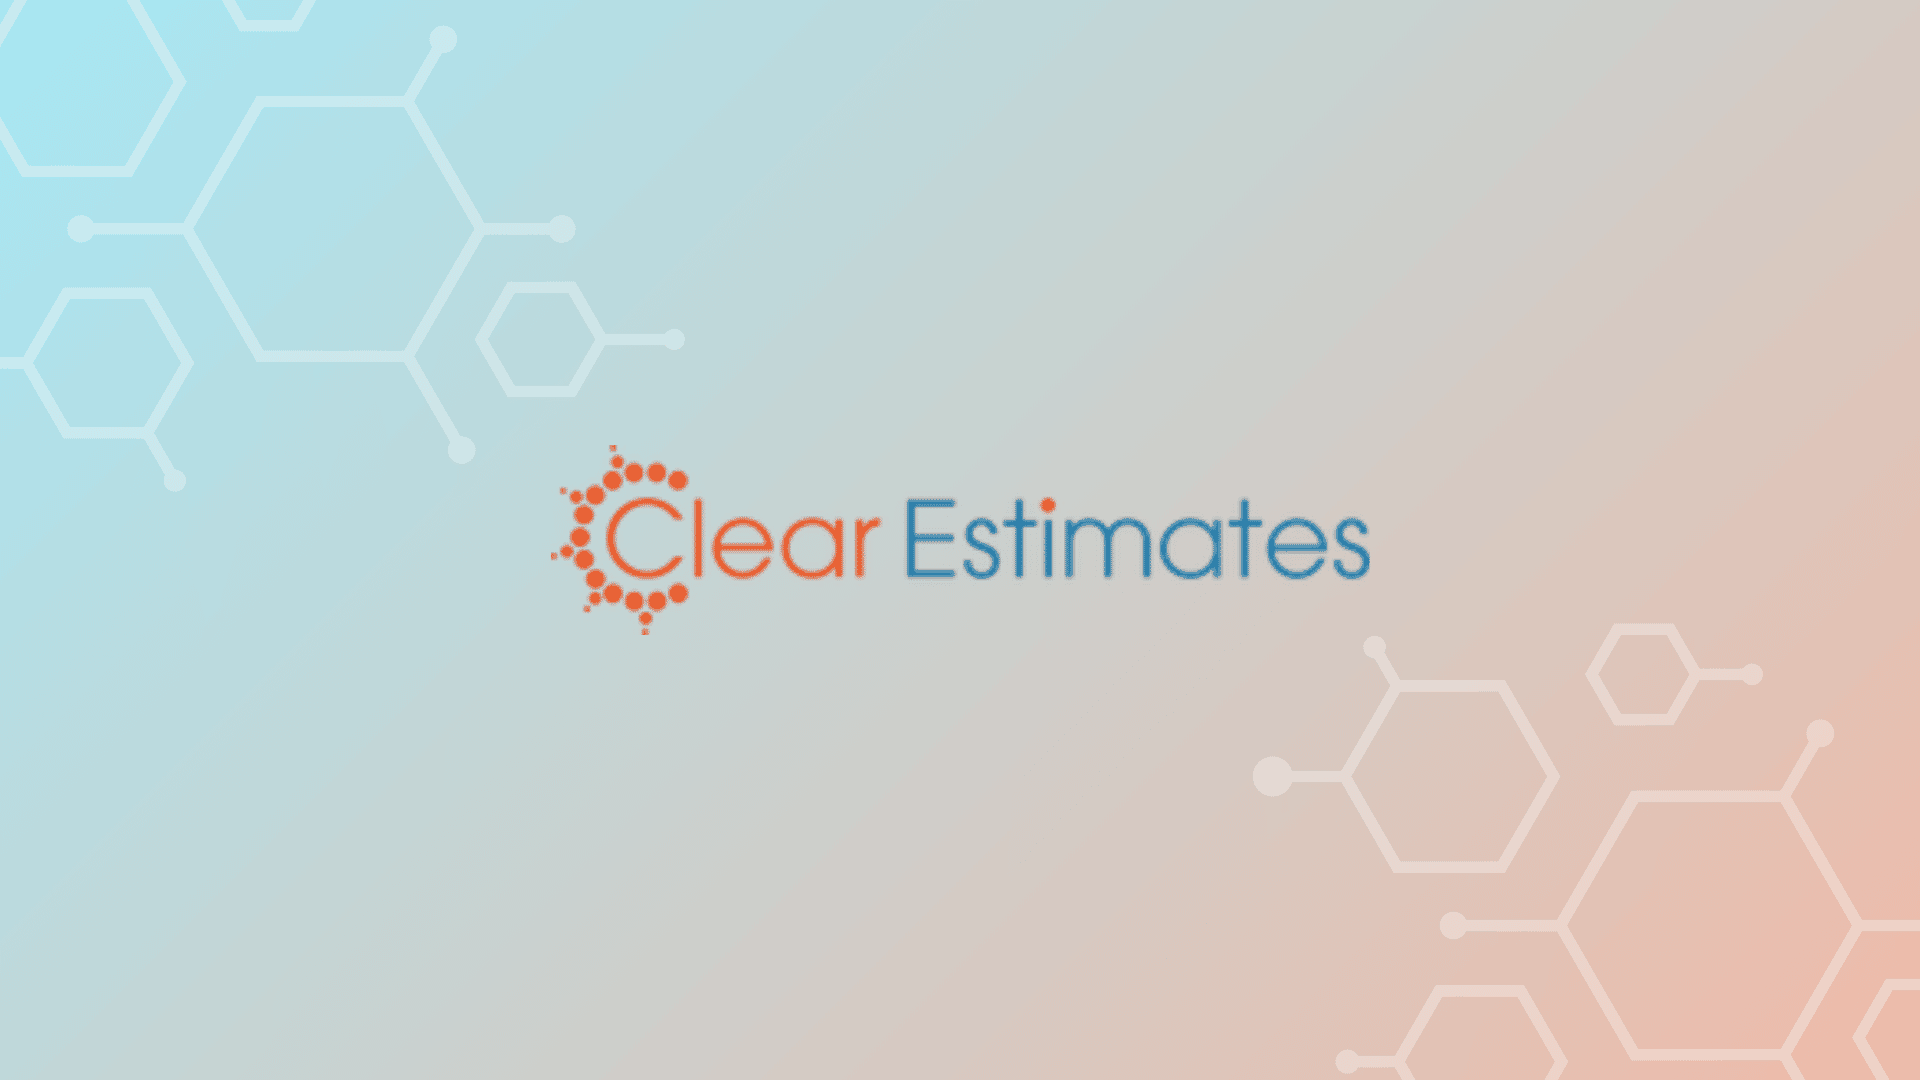 Clear Estimates Logo